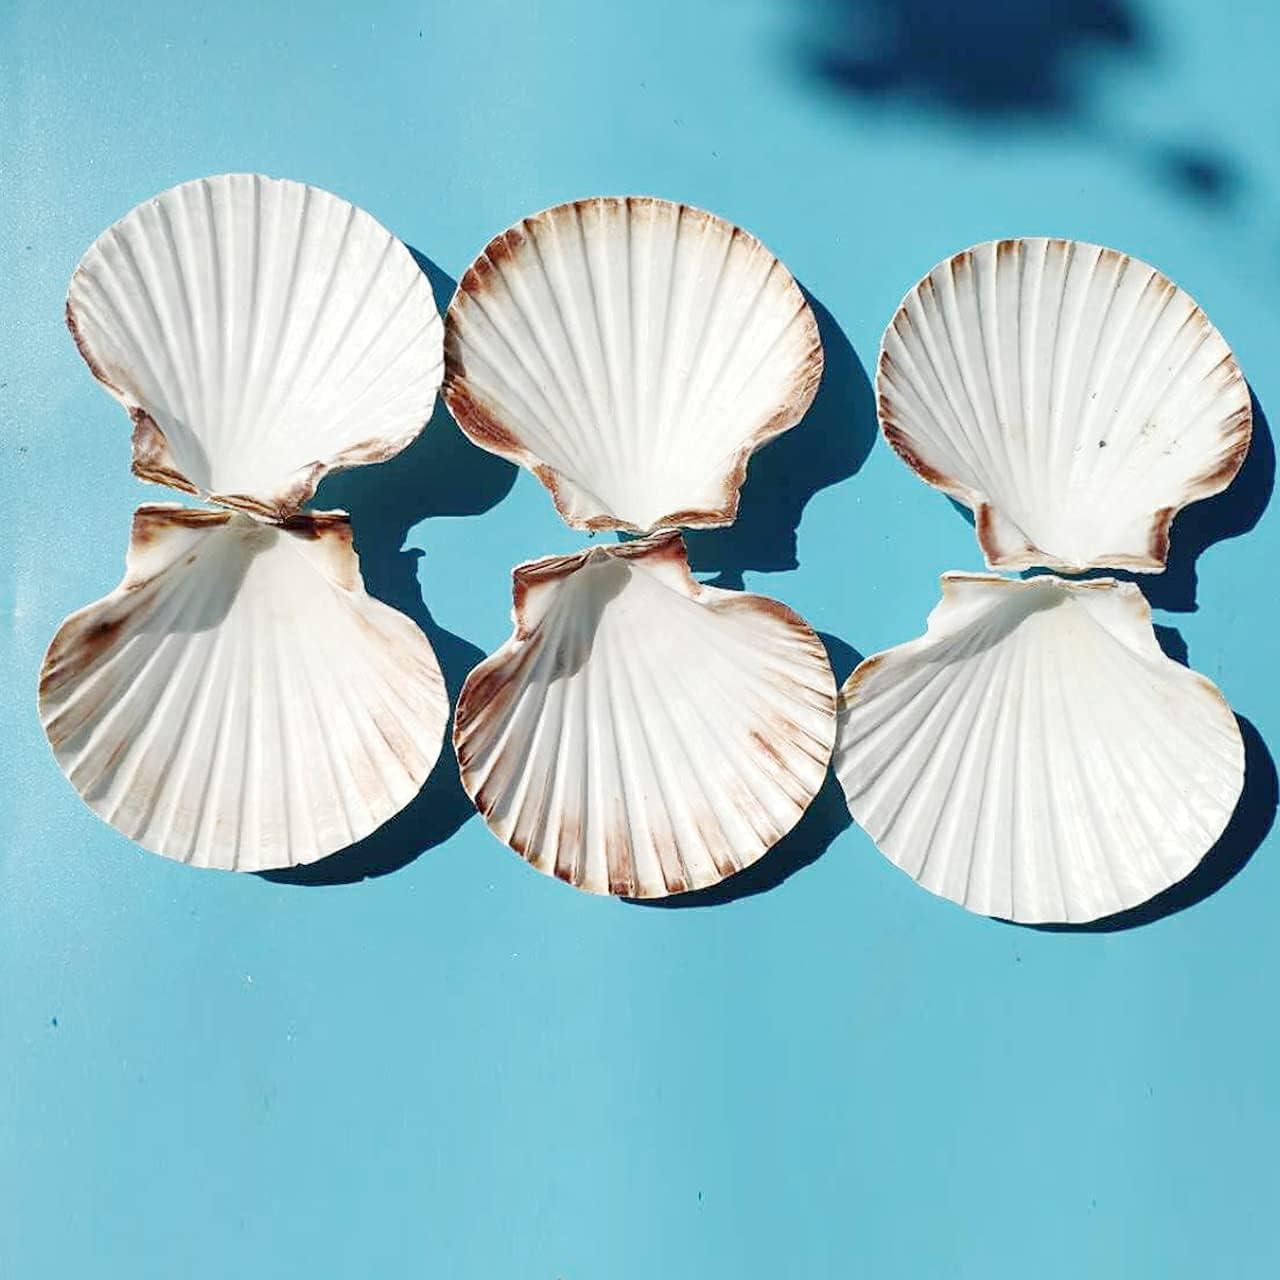 10 PCS 4-5 inch Large Scallop Shells Baking Sea Shells Large Natural White Scallop  Shell From Sea Beach For DIY Craft Decor XL-LARGE-1